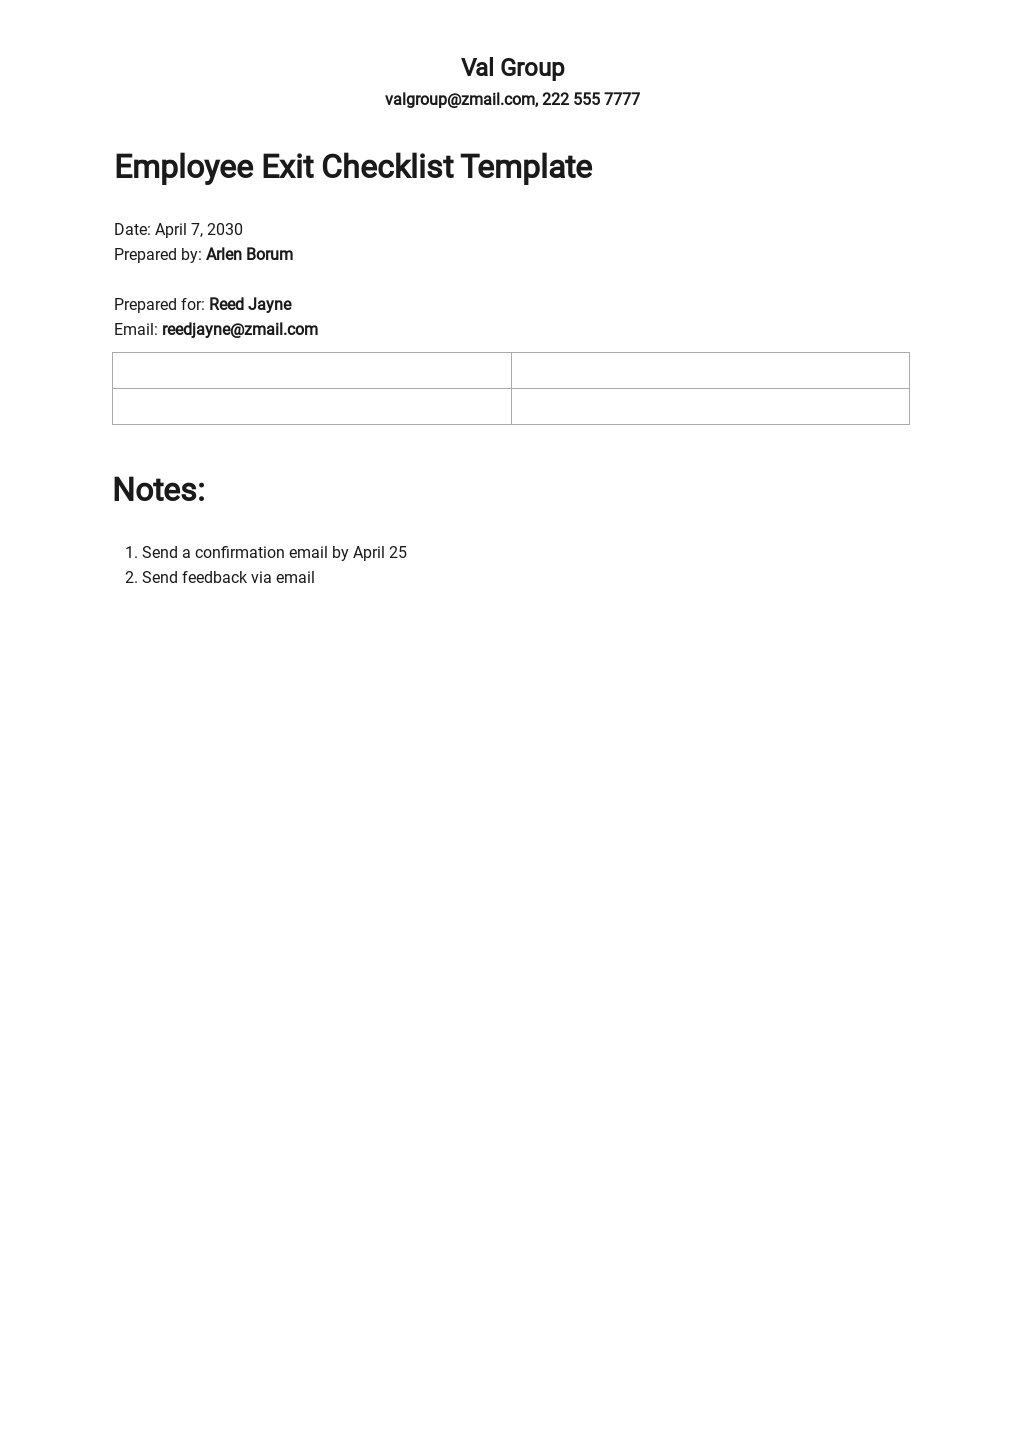 Employee Exit Checklist Template [Free PDF] - Google Docs, Word, Apple